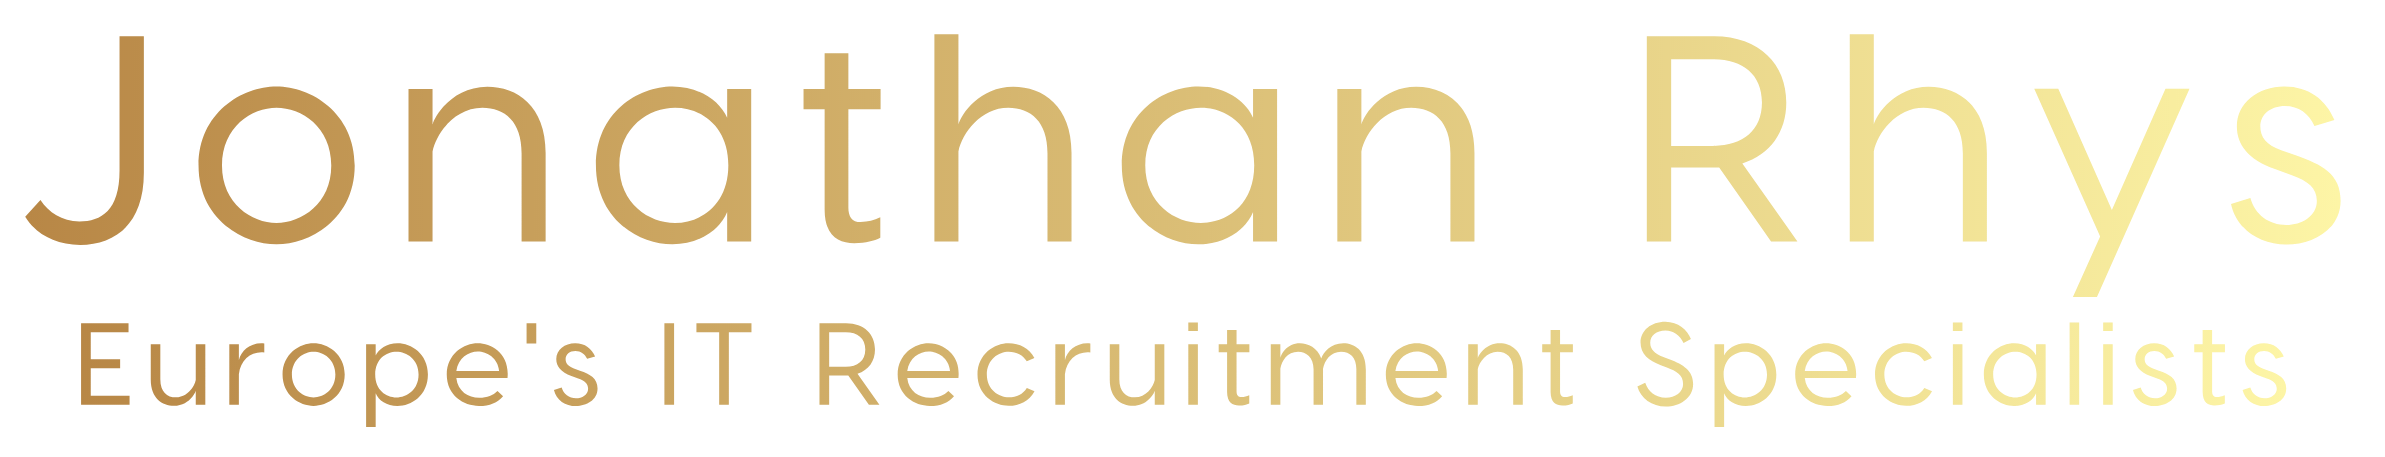 Jonathan Rhys Recruitment logo